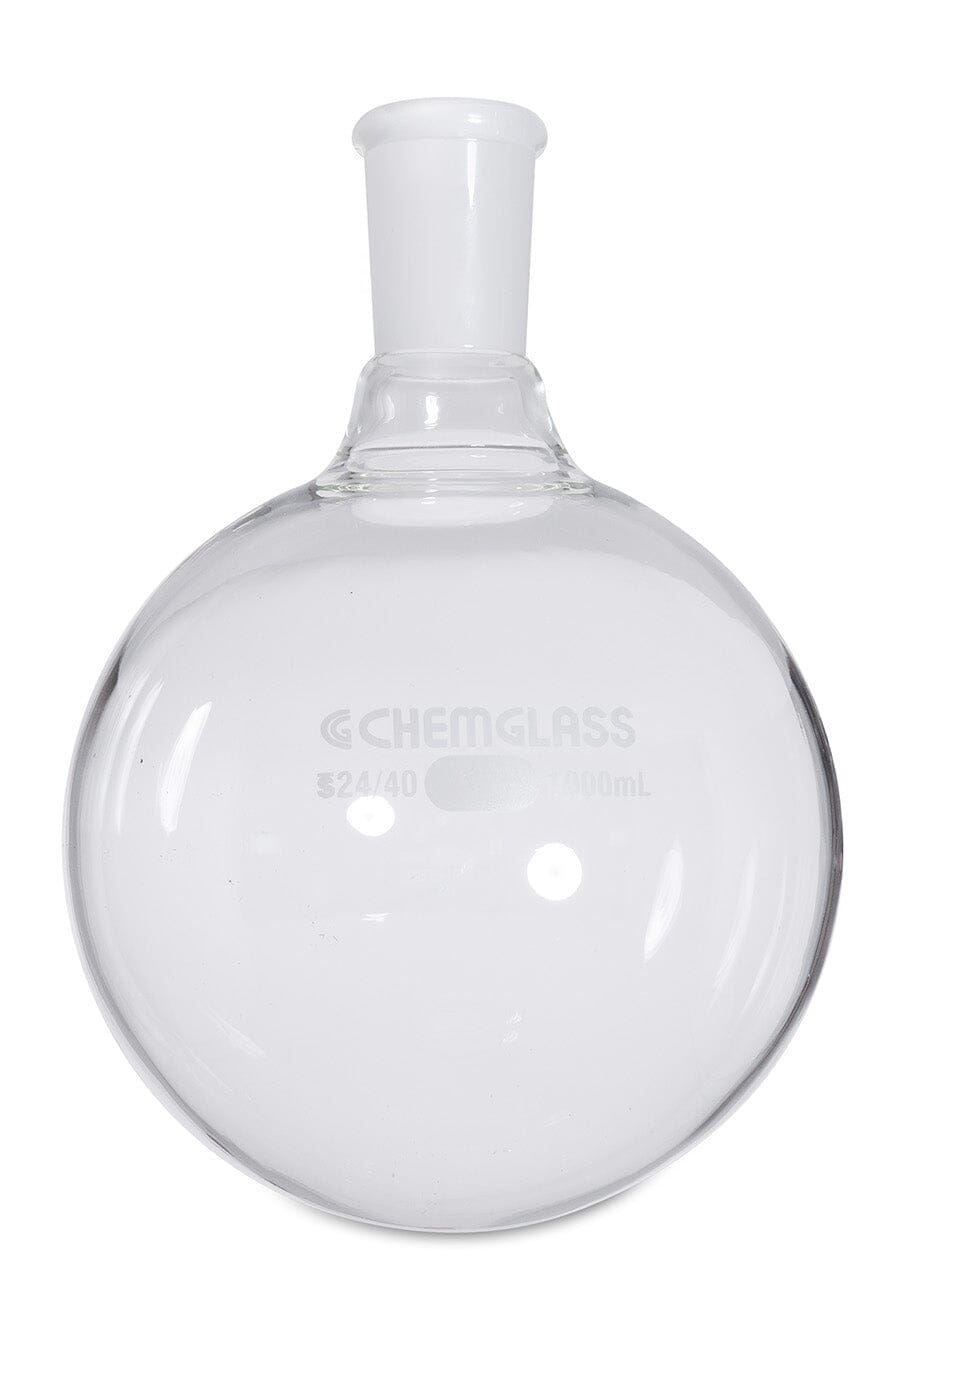 Chemglass, Flask, Round Bottom, 1000mlL, 24/40, Heavy Wall, Single Neck